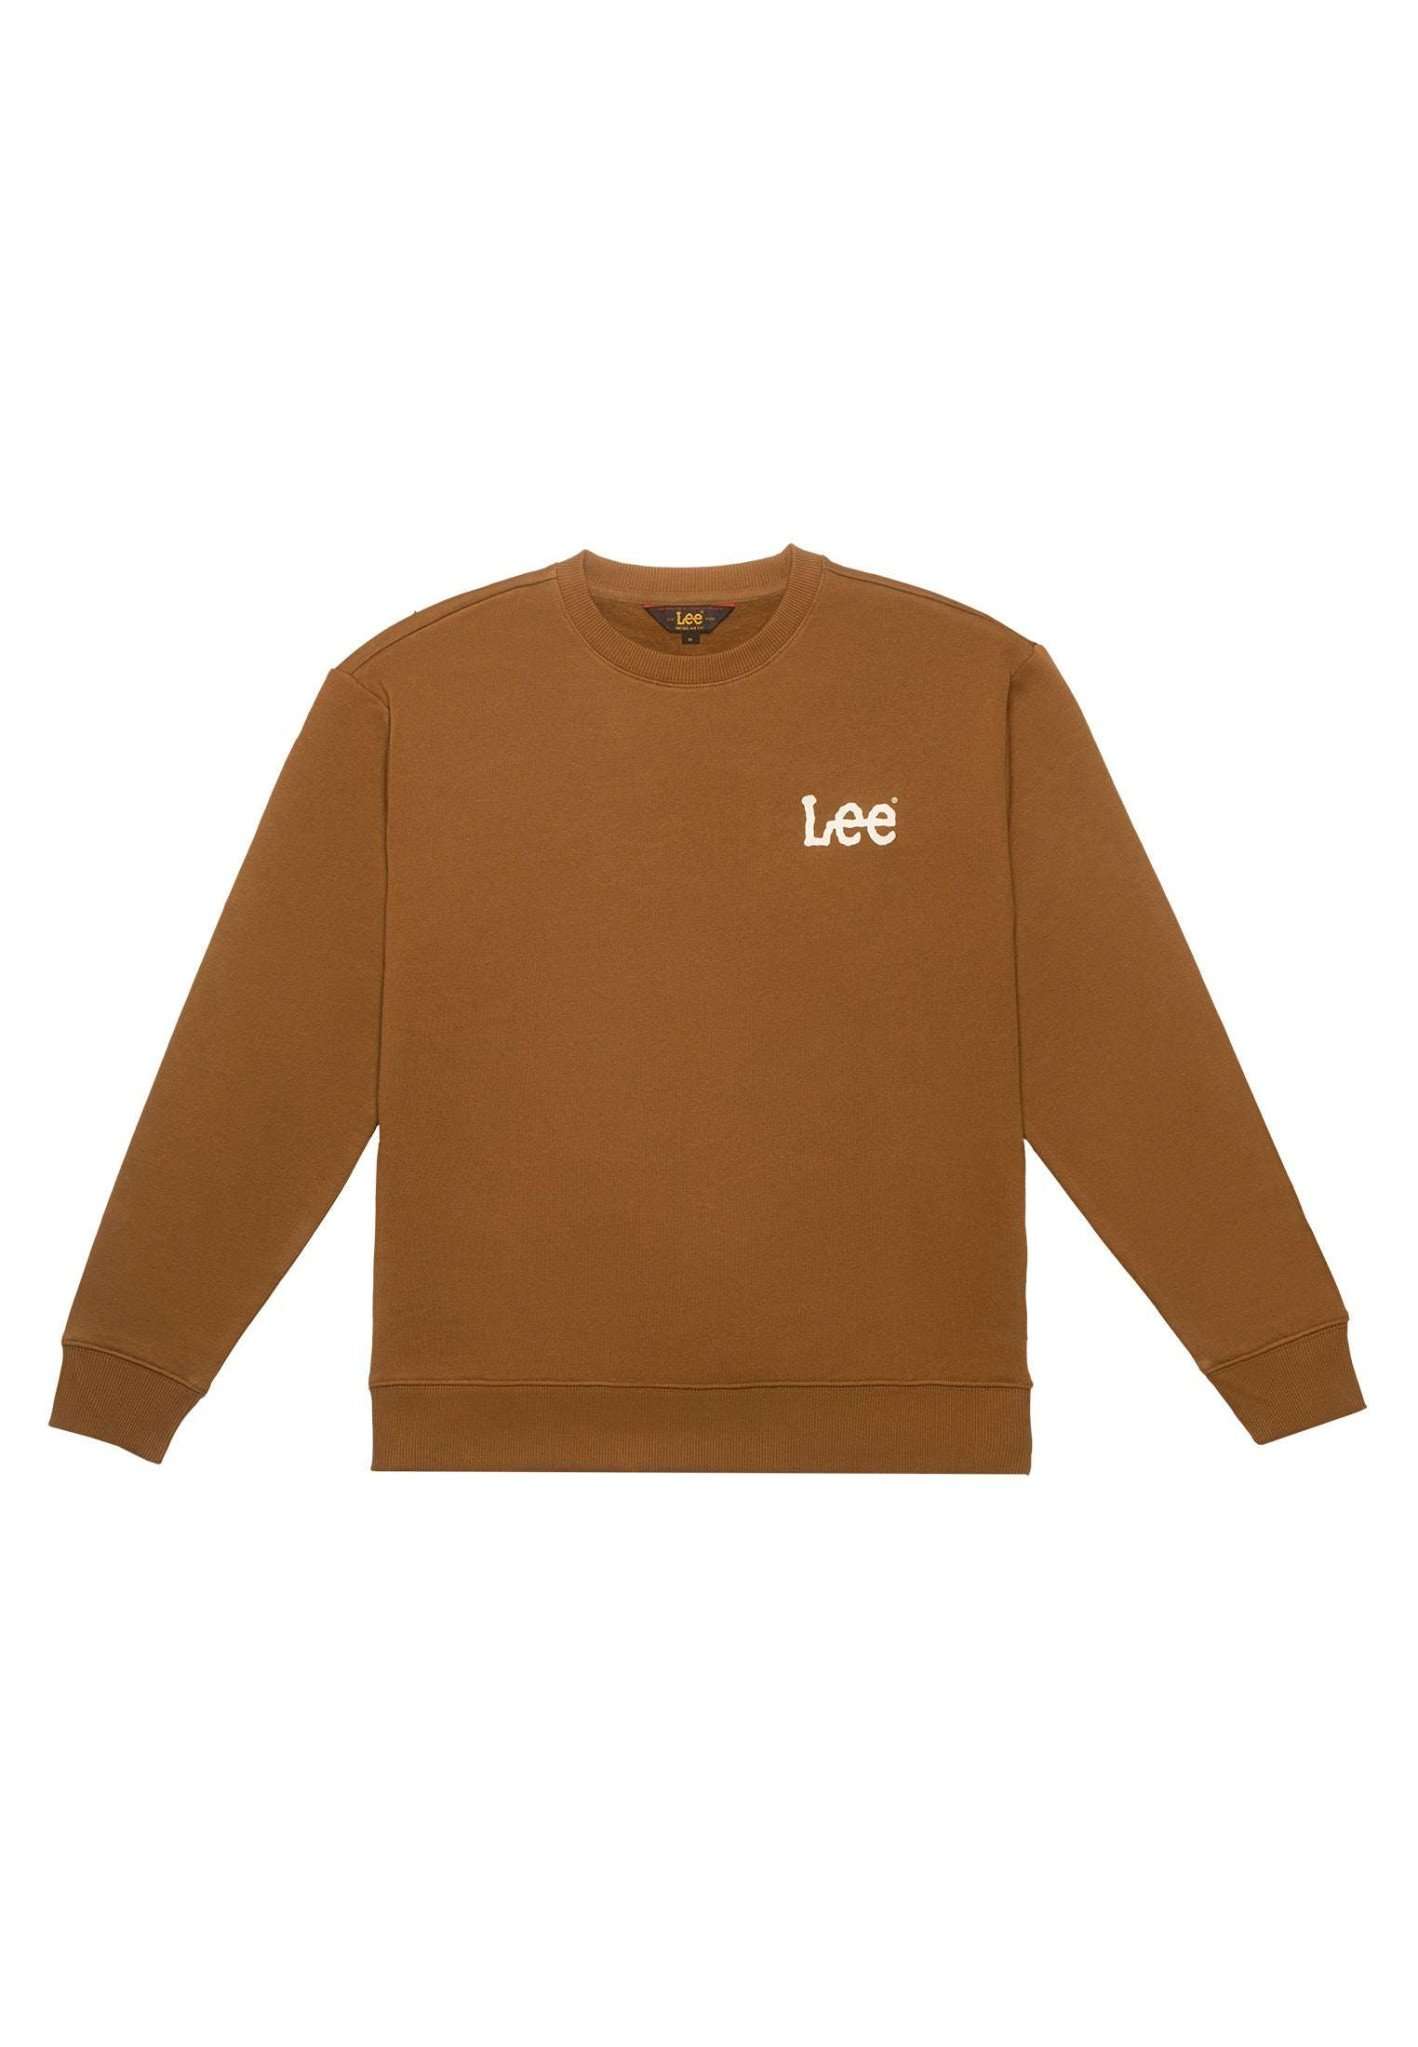 Wobbly Lee Sweatshirt in Tumbleweed Sweatshirts Lee   